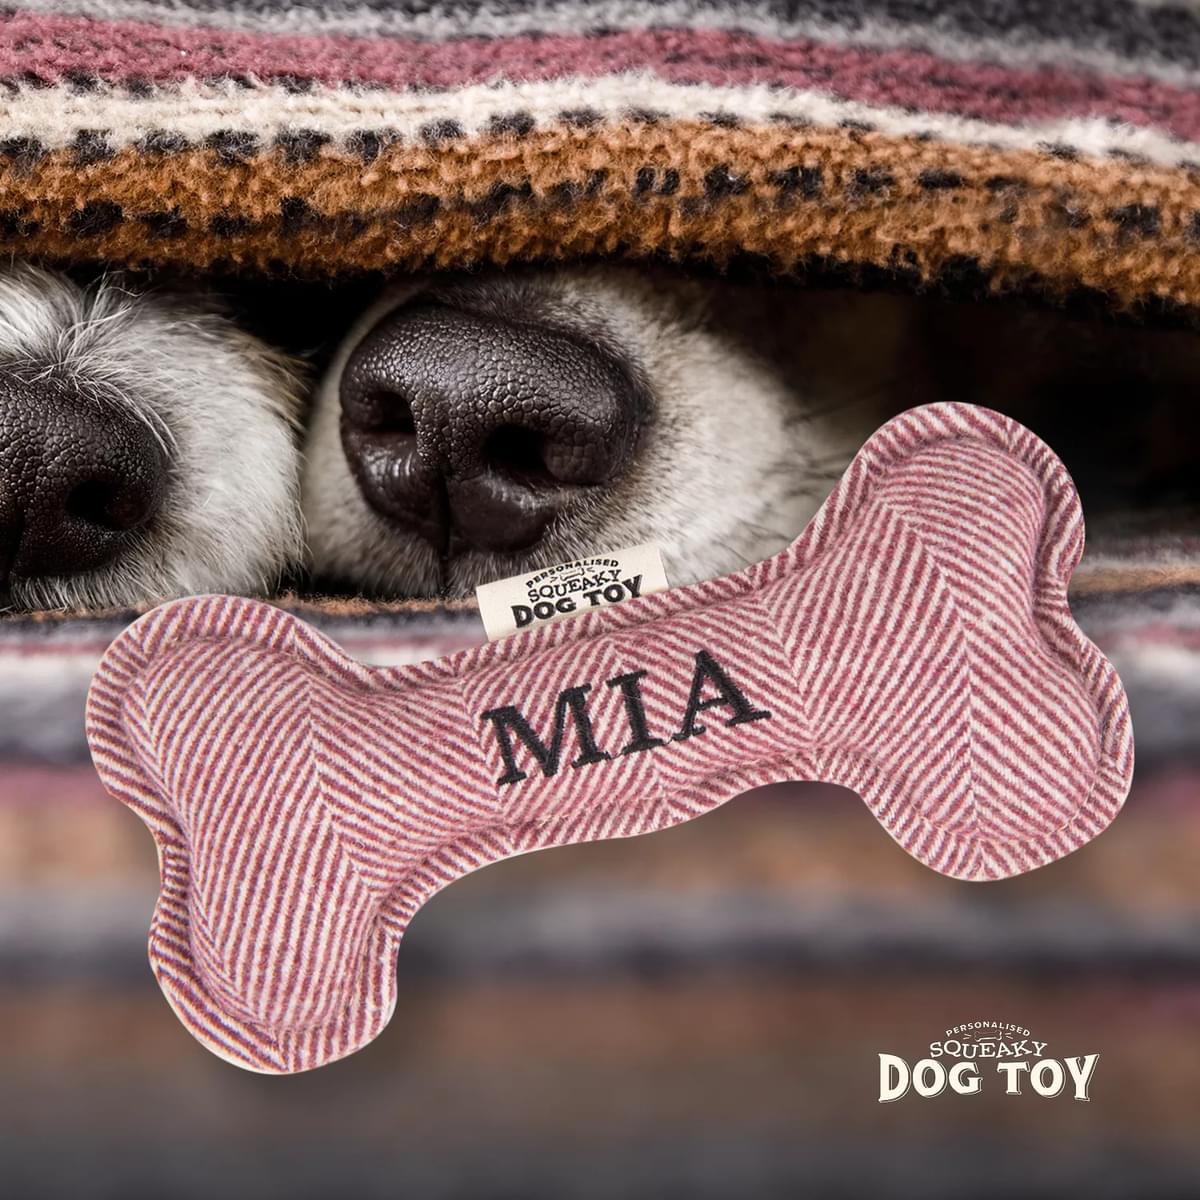 Named Squeaky Dog Toy- Mia. Bone shaped herringbone tweed pattern dog toy. 